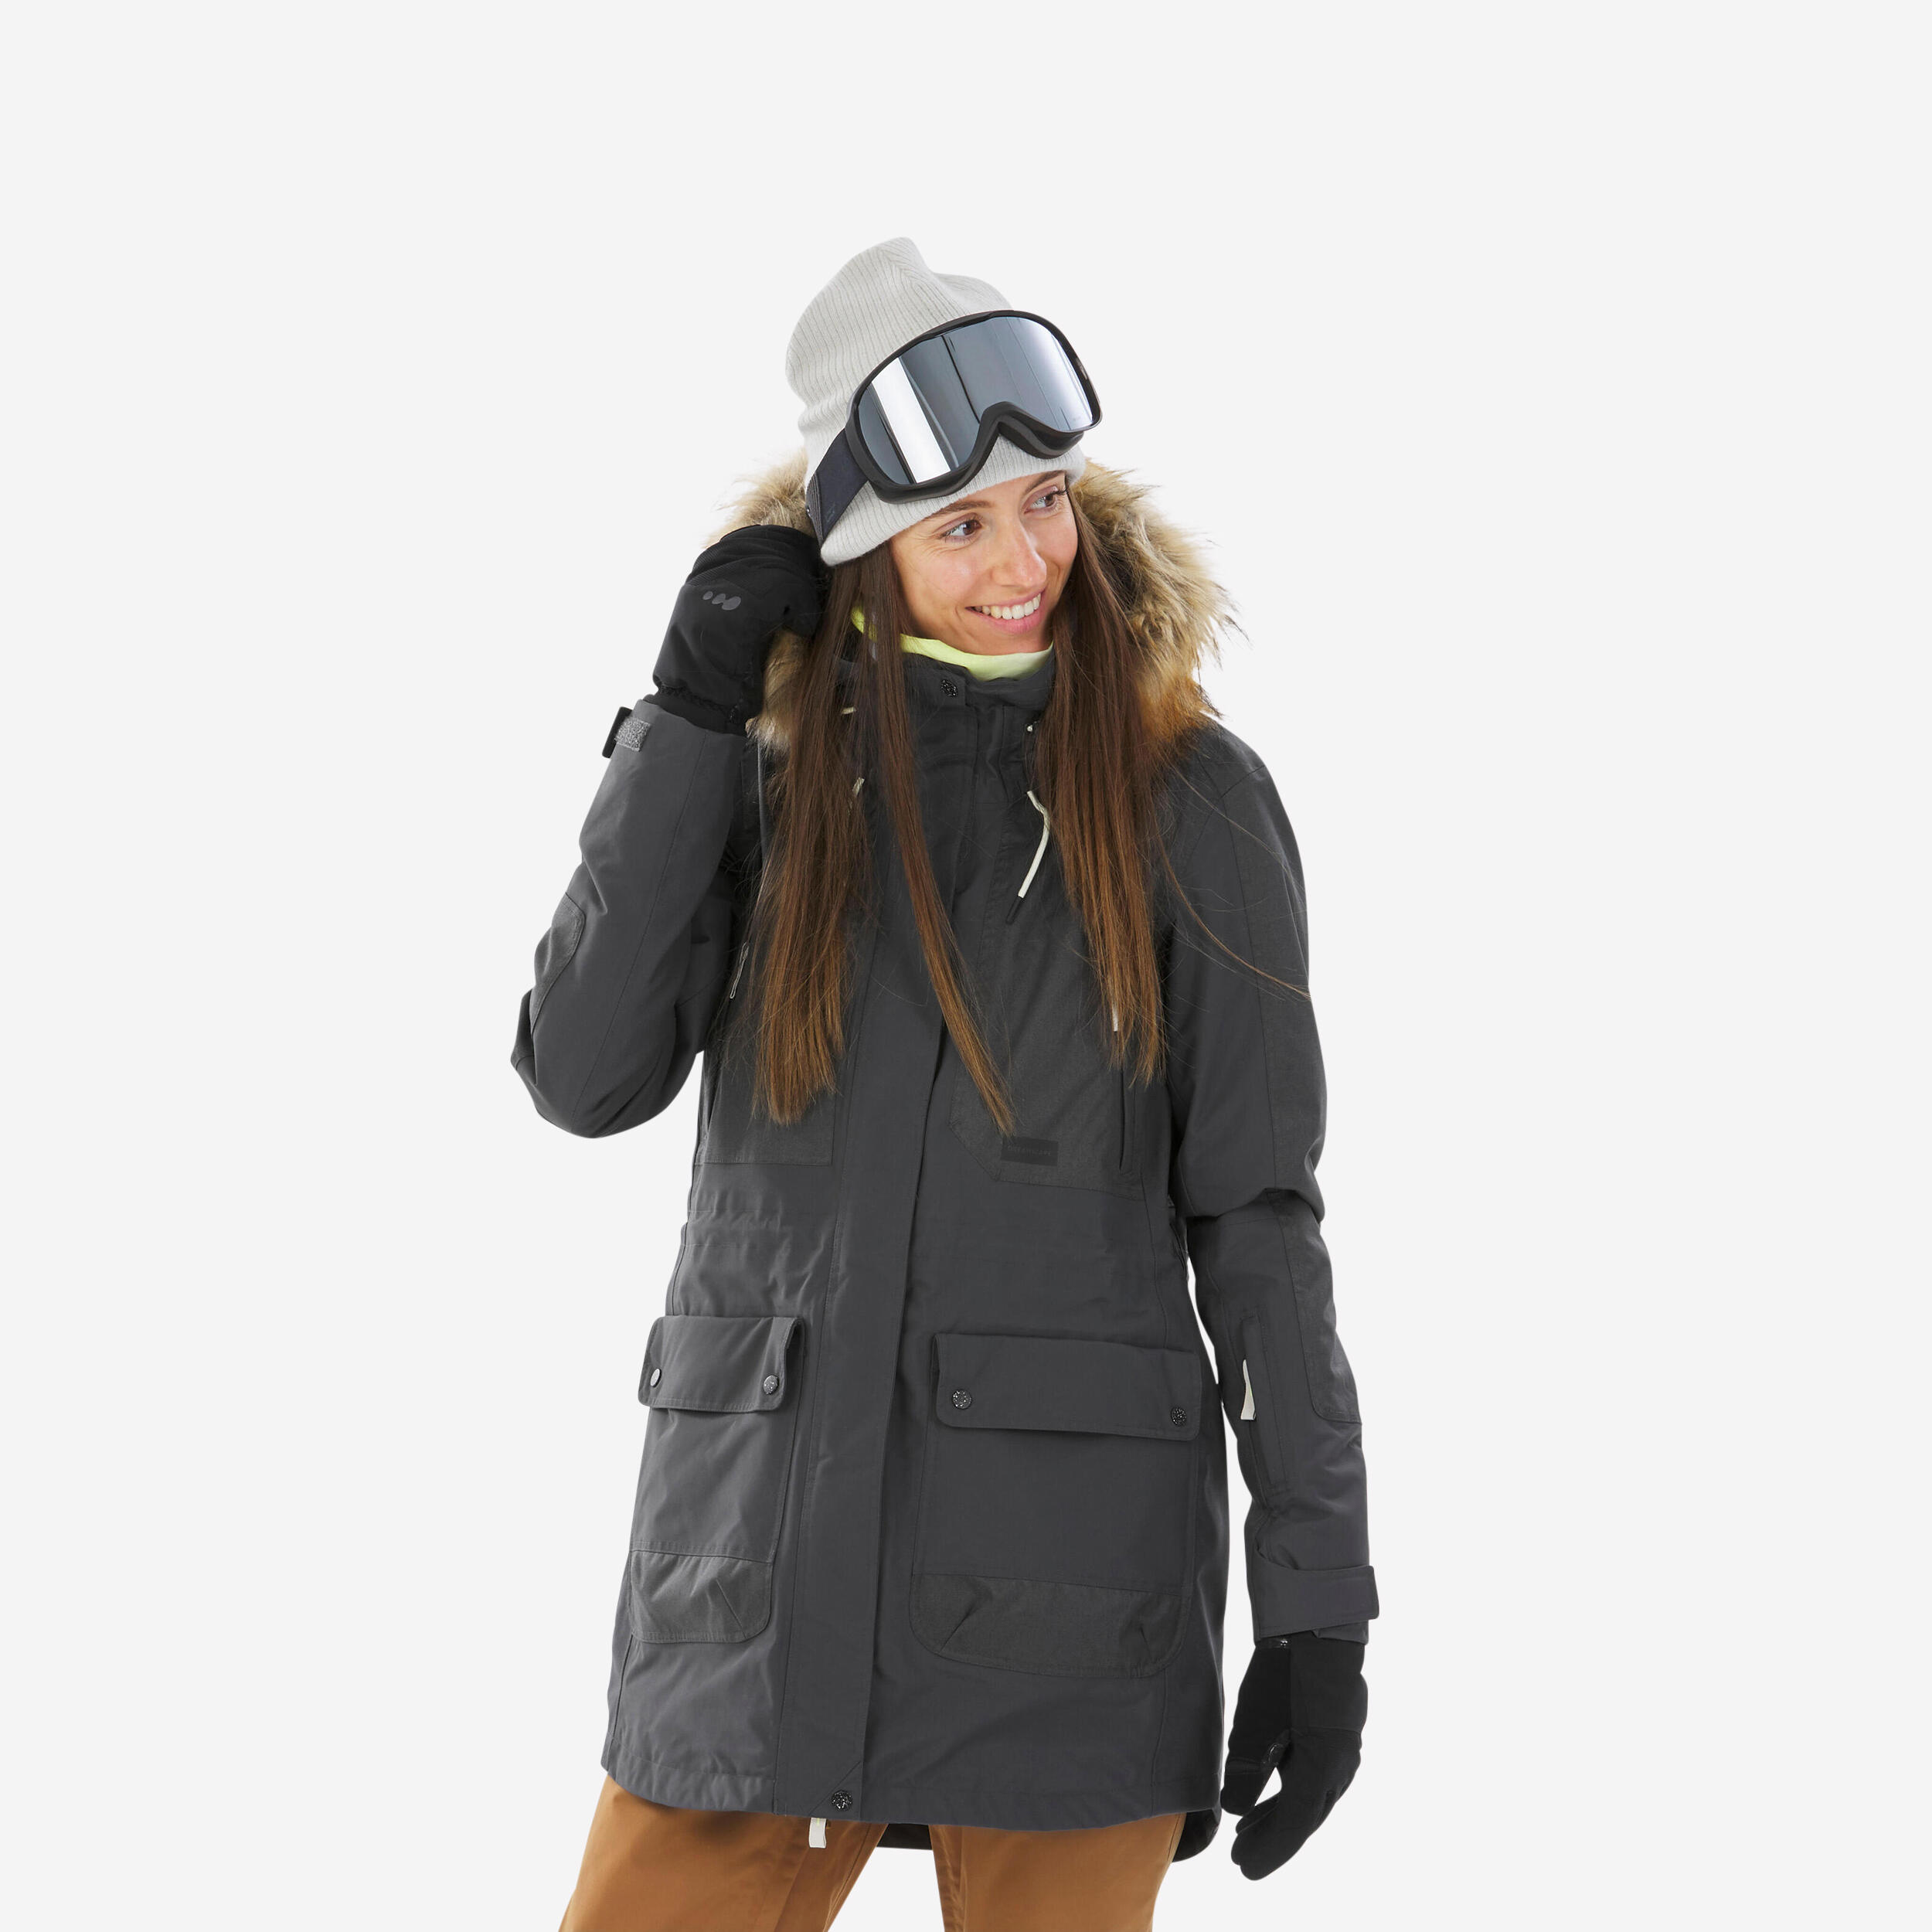 Women’s Snowboard Jacket - SNB 500 Grey